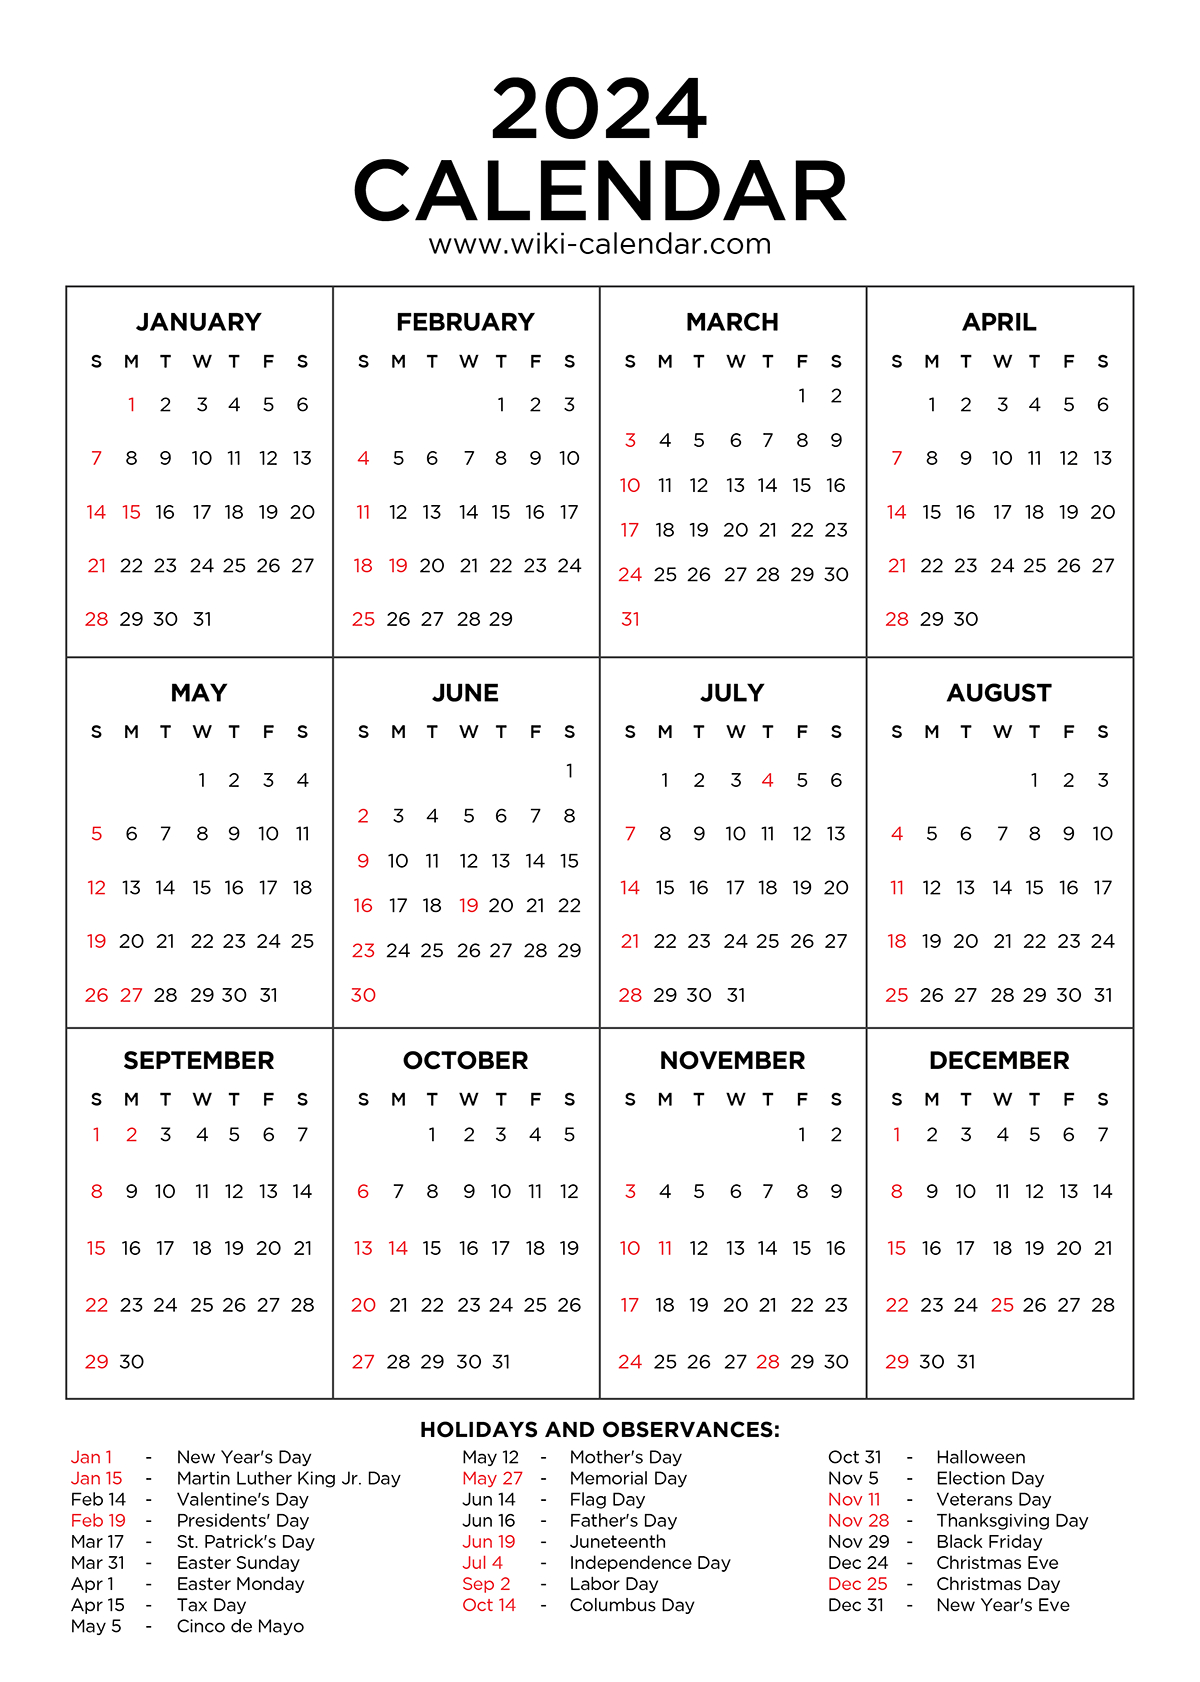 Year 2024 Calendar Printable With Holidays - Wiki Calendar for Free Printable Calendar 2024 With Pictures